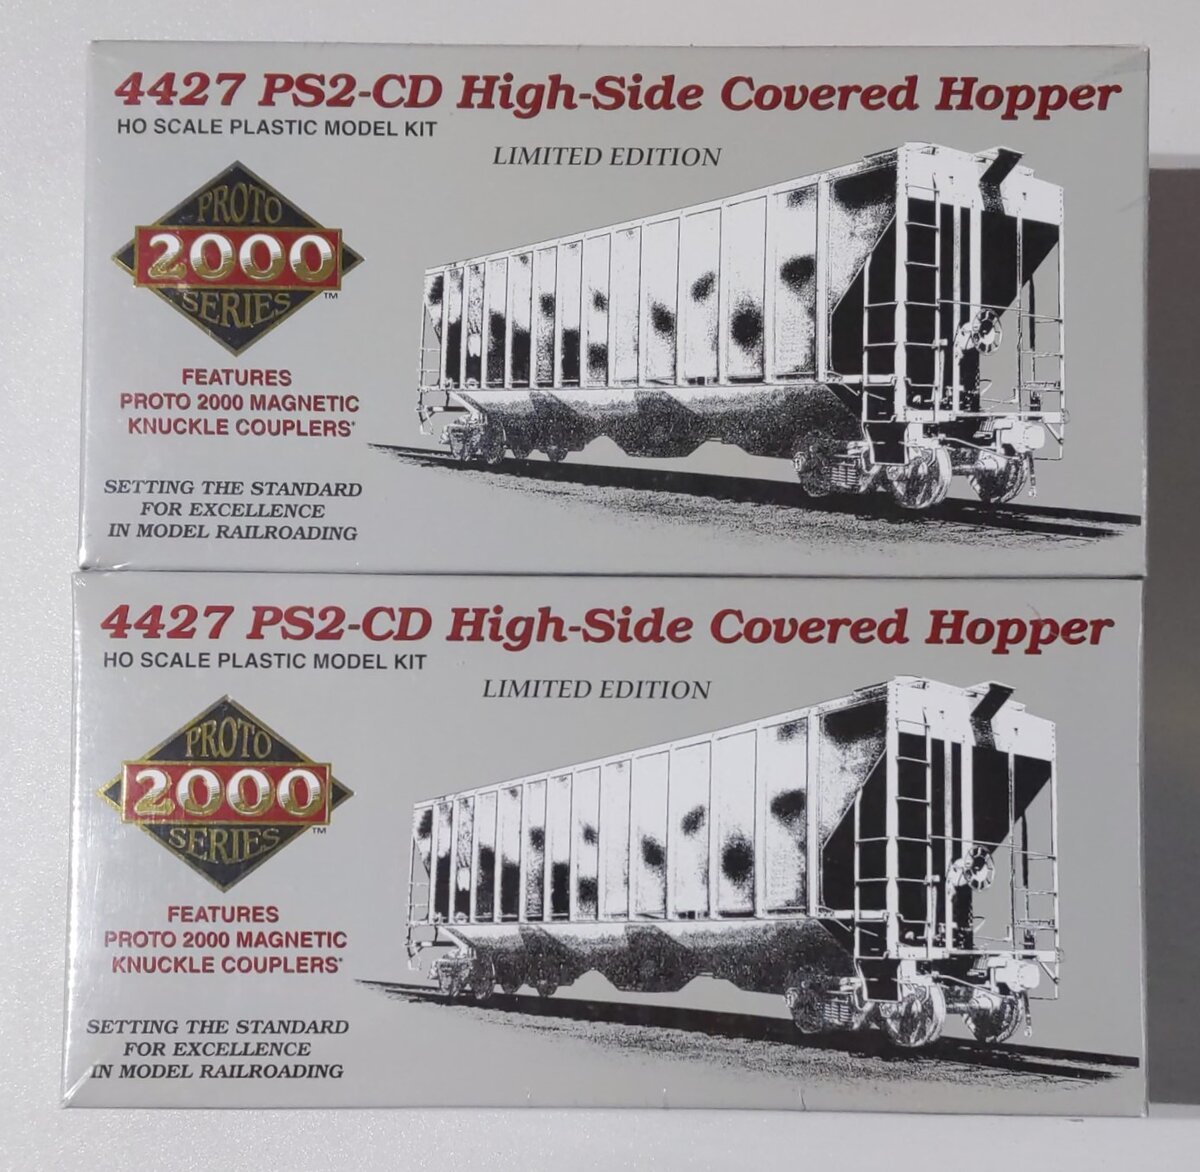 Proto 2000 21855 HO D&RGW 4427 PS2-CD High-Side Covered Hopper Kits (Pack of 4)